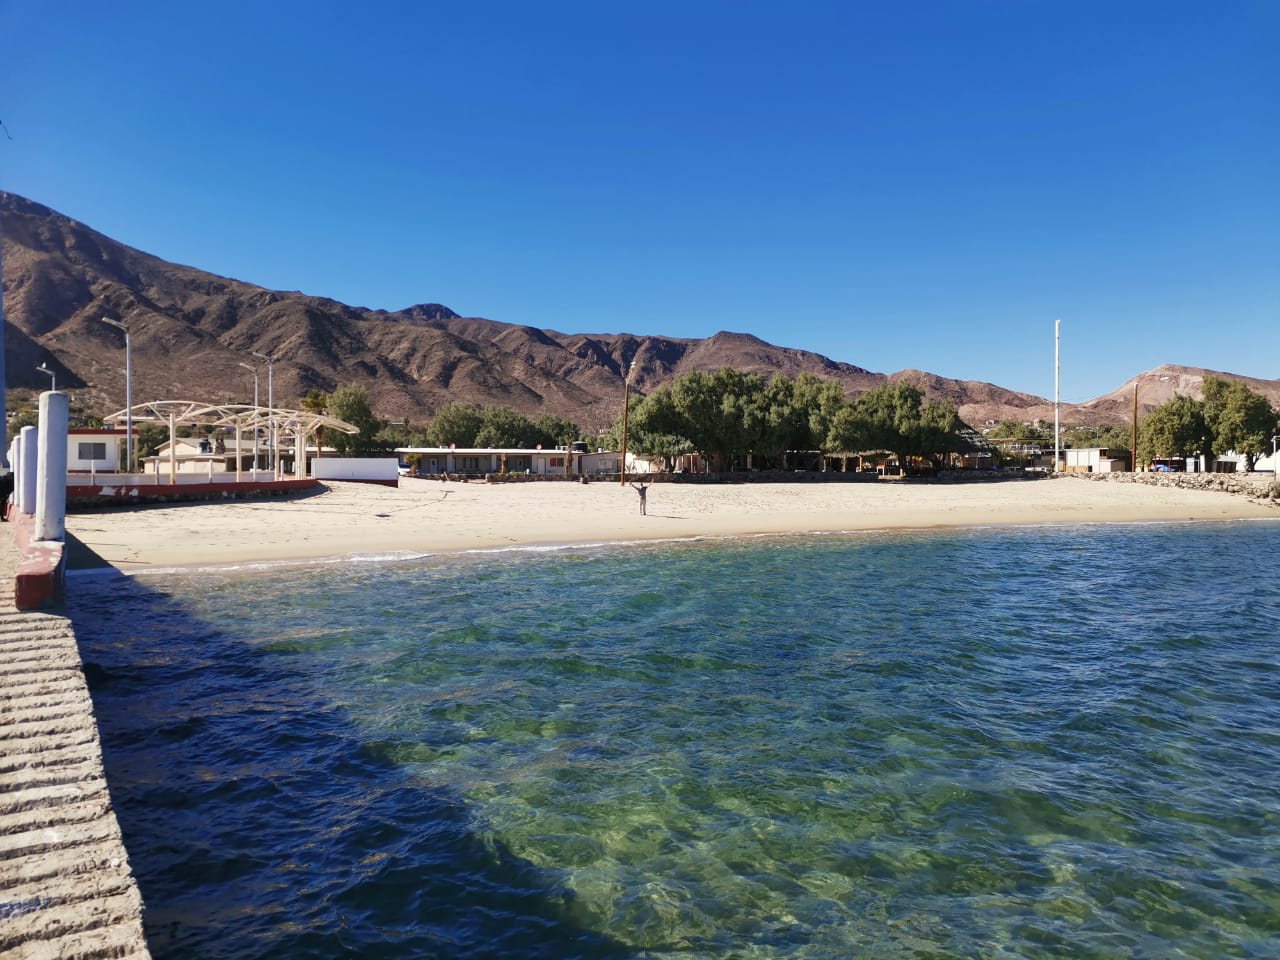 Valokuva Playa Bahia de los Angelesista. pinnalla kirkas hiekka:n kanssa